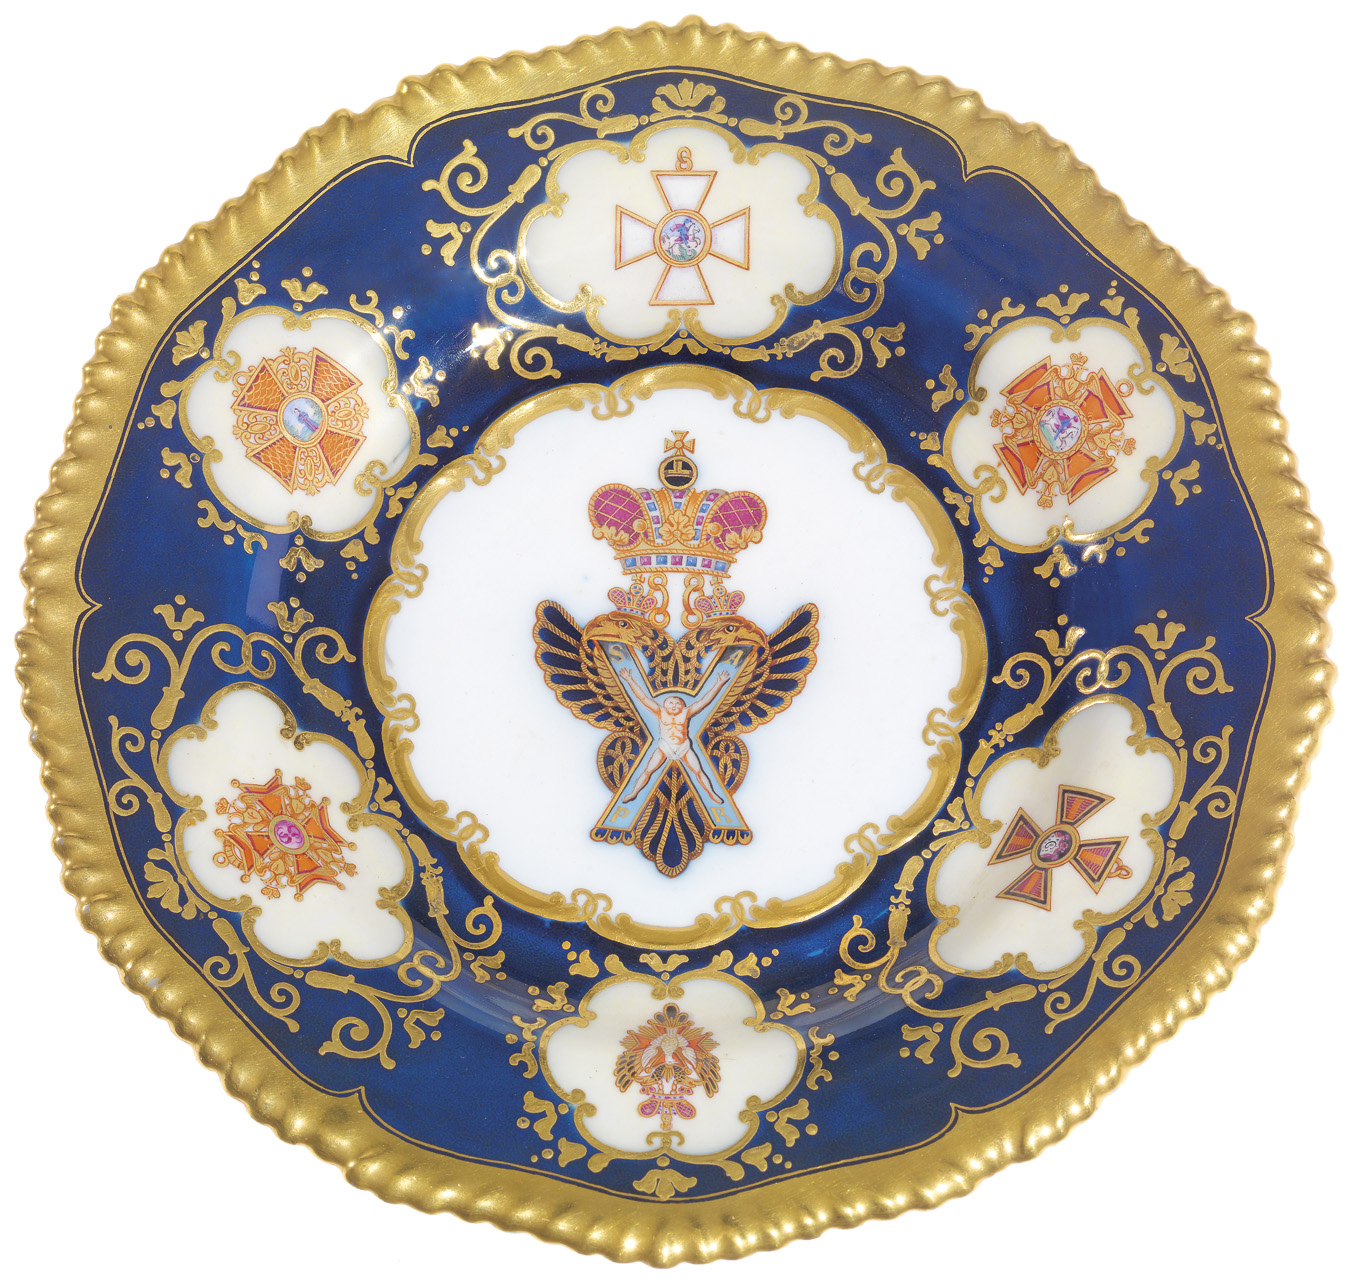 IMPERIAL PORCELAIN MANUFACTORY, PERIOD OF NICHOLAS I (1825–1855)